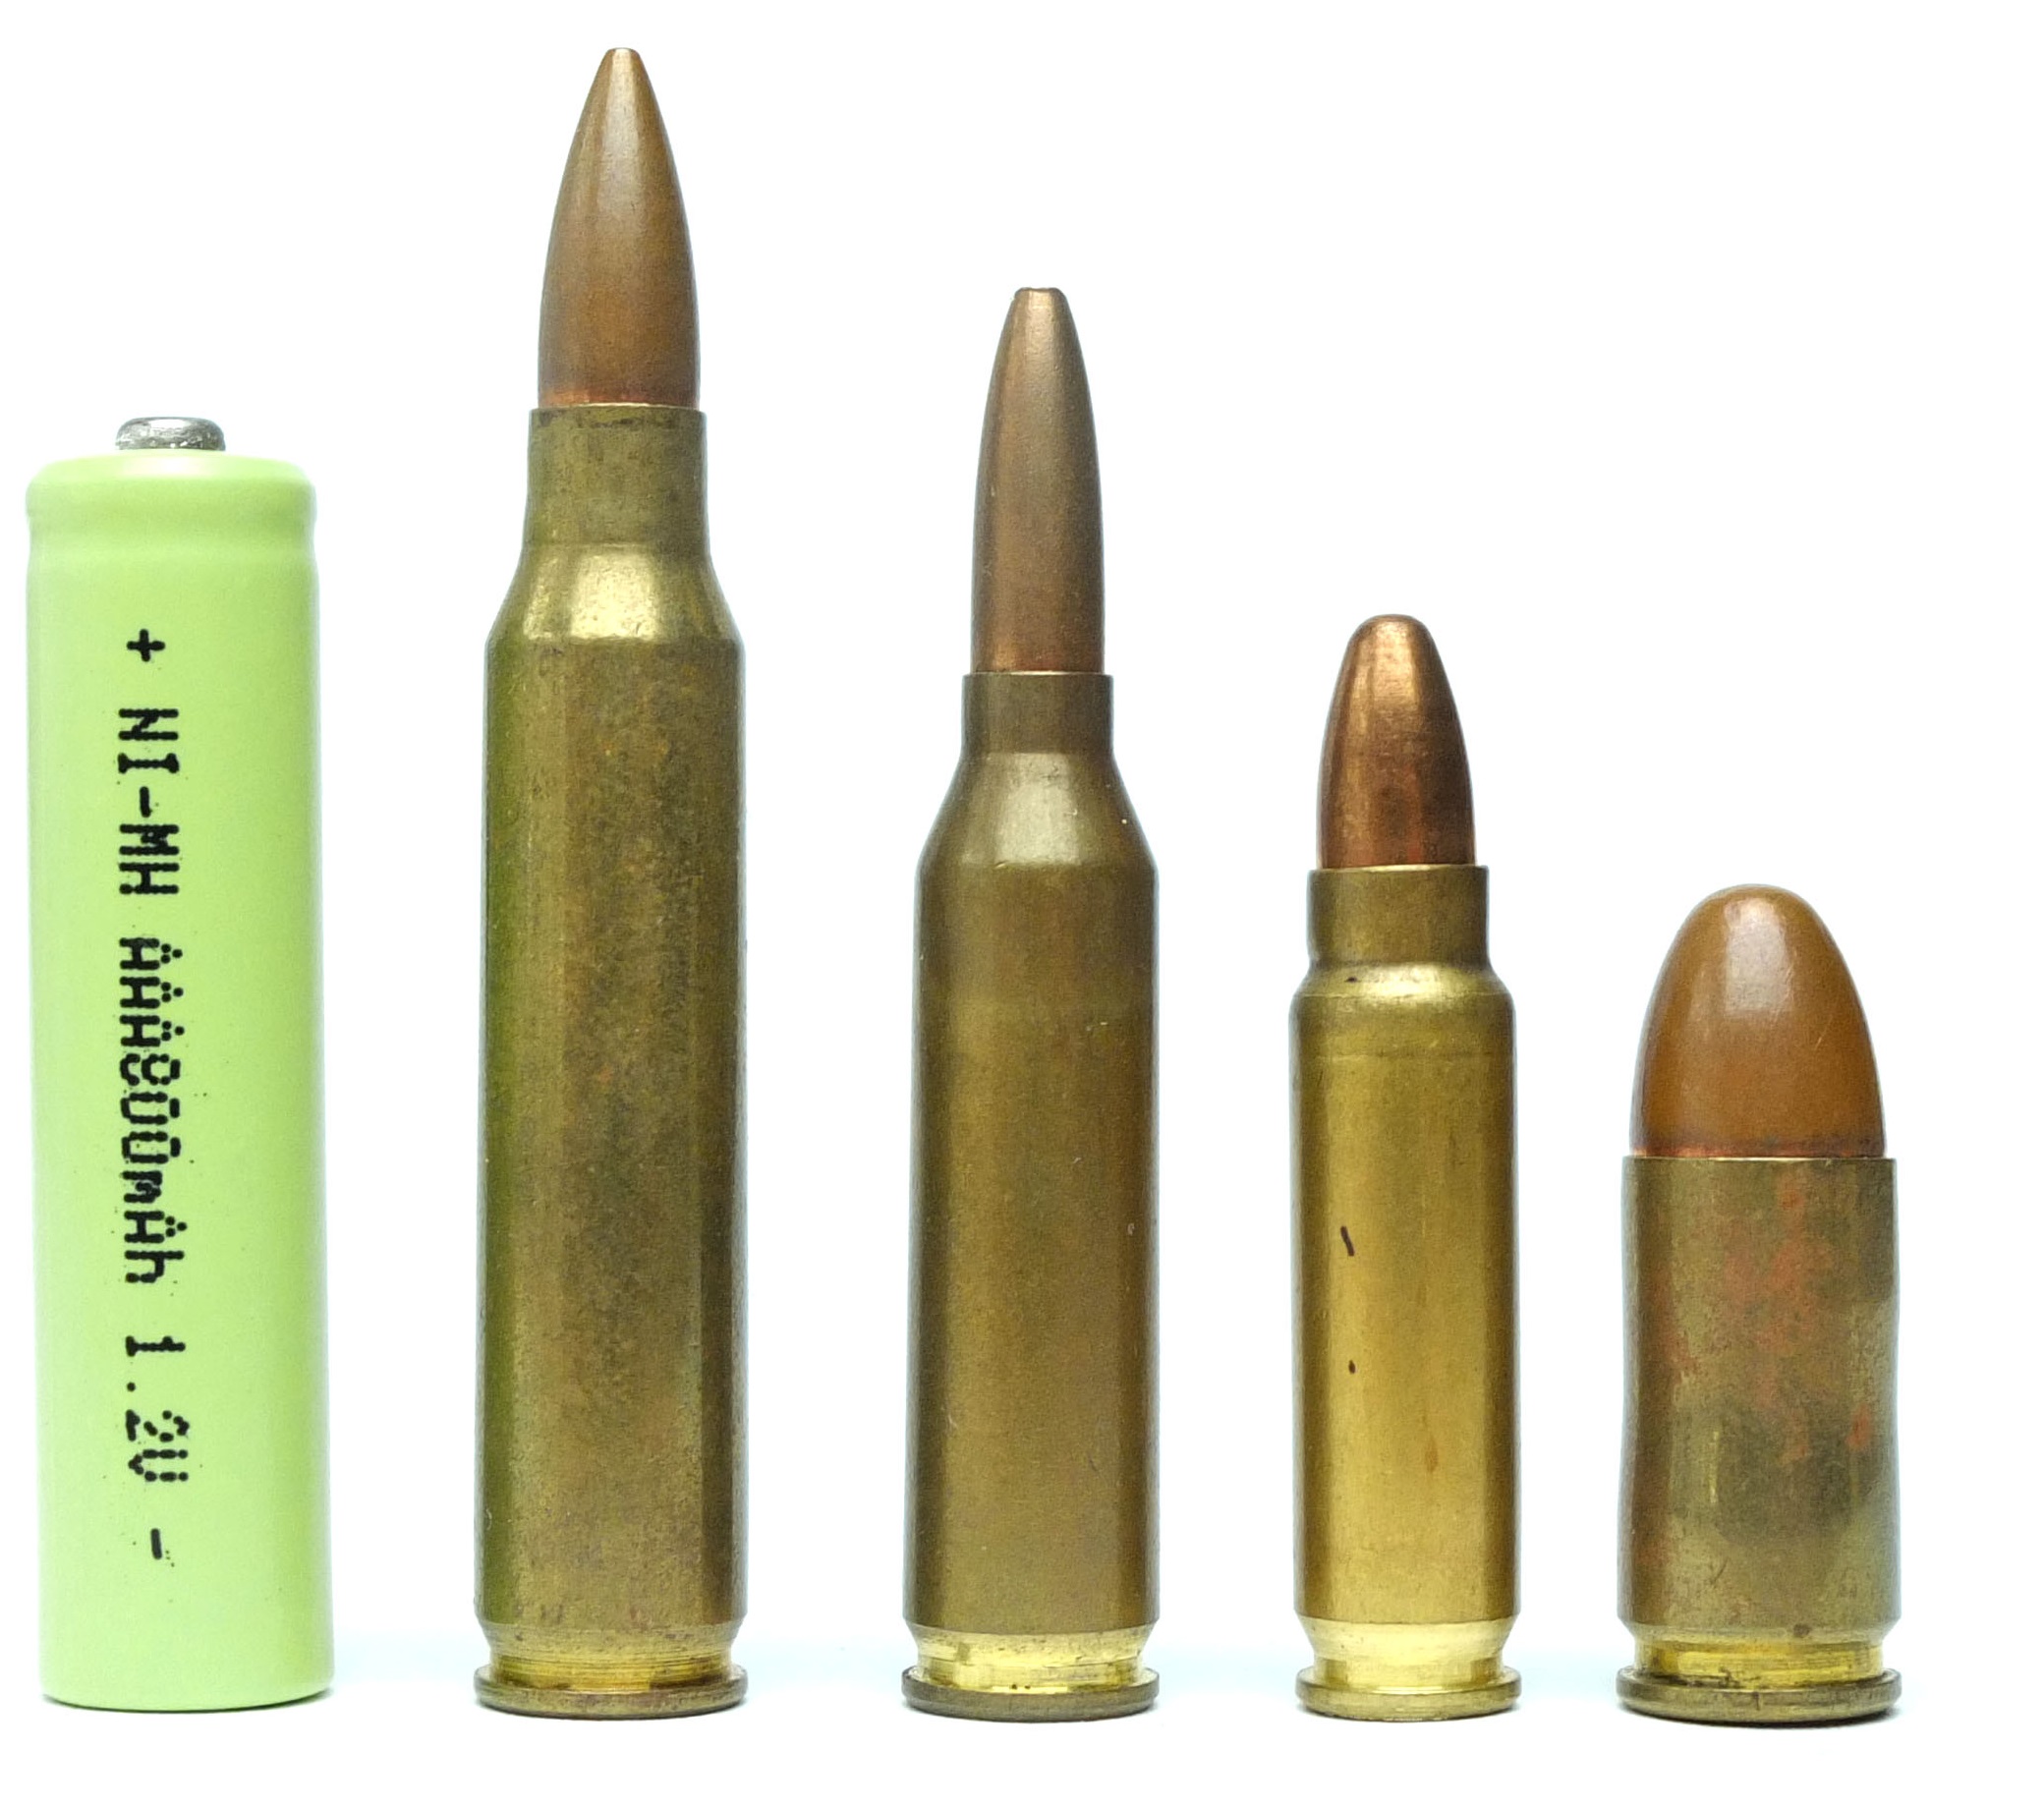 Cartridge_Comparison_5.56x45mm,_4.6x30mm_HK,_5.7x28mm_FN_and_9x19mm_Para.jpg